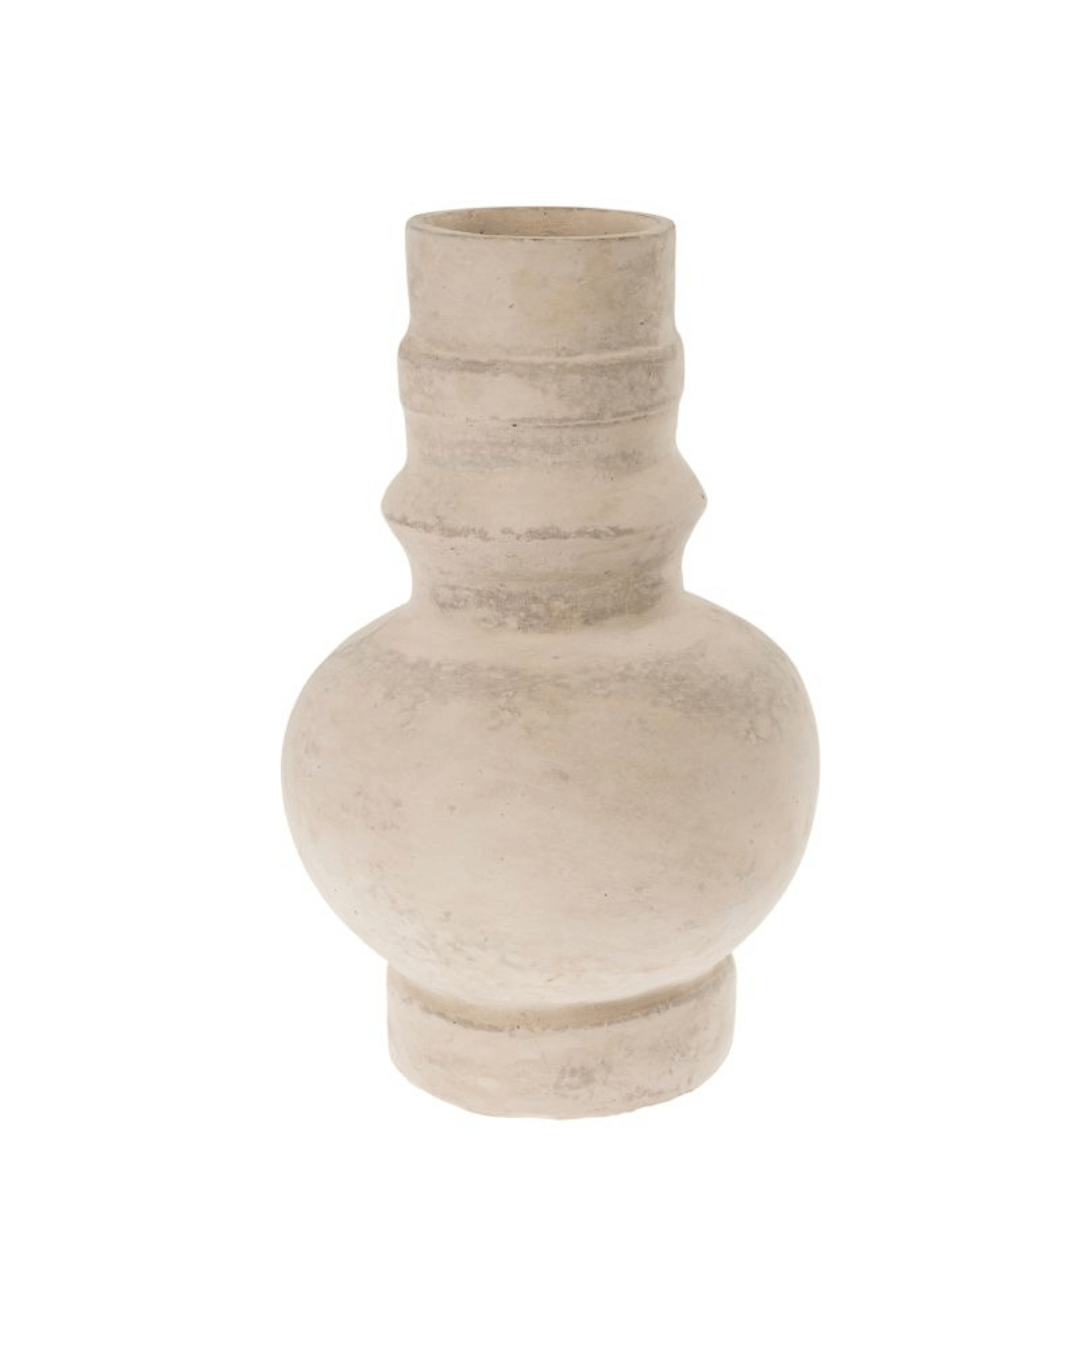 Paper Mache Vase